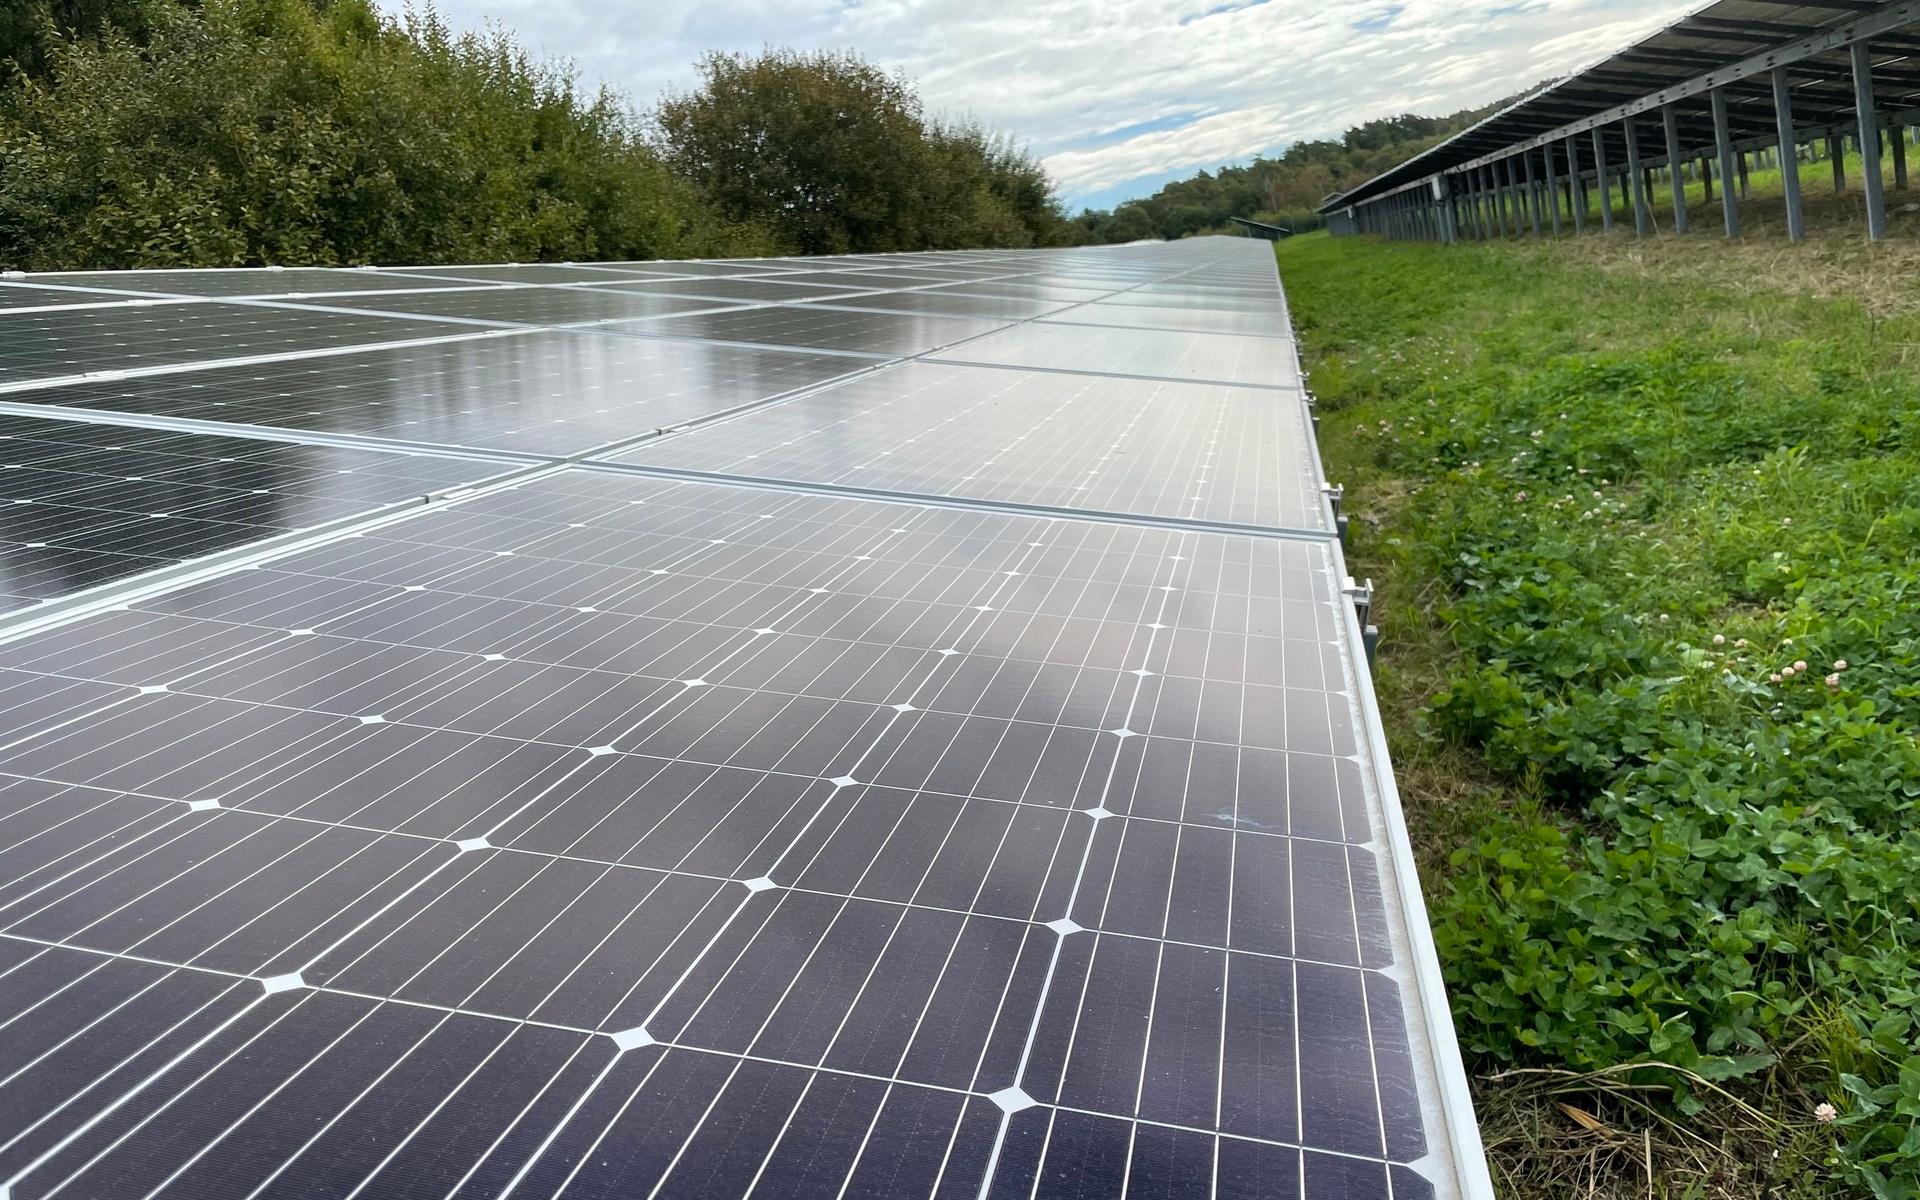 Totalt kommer drygt 1,5 MWp från solcellerna i Frillesås årligen.